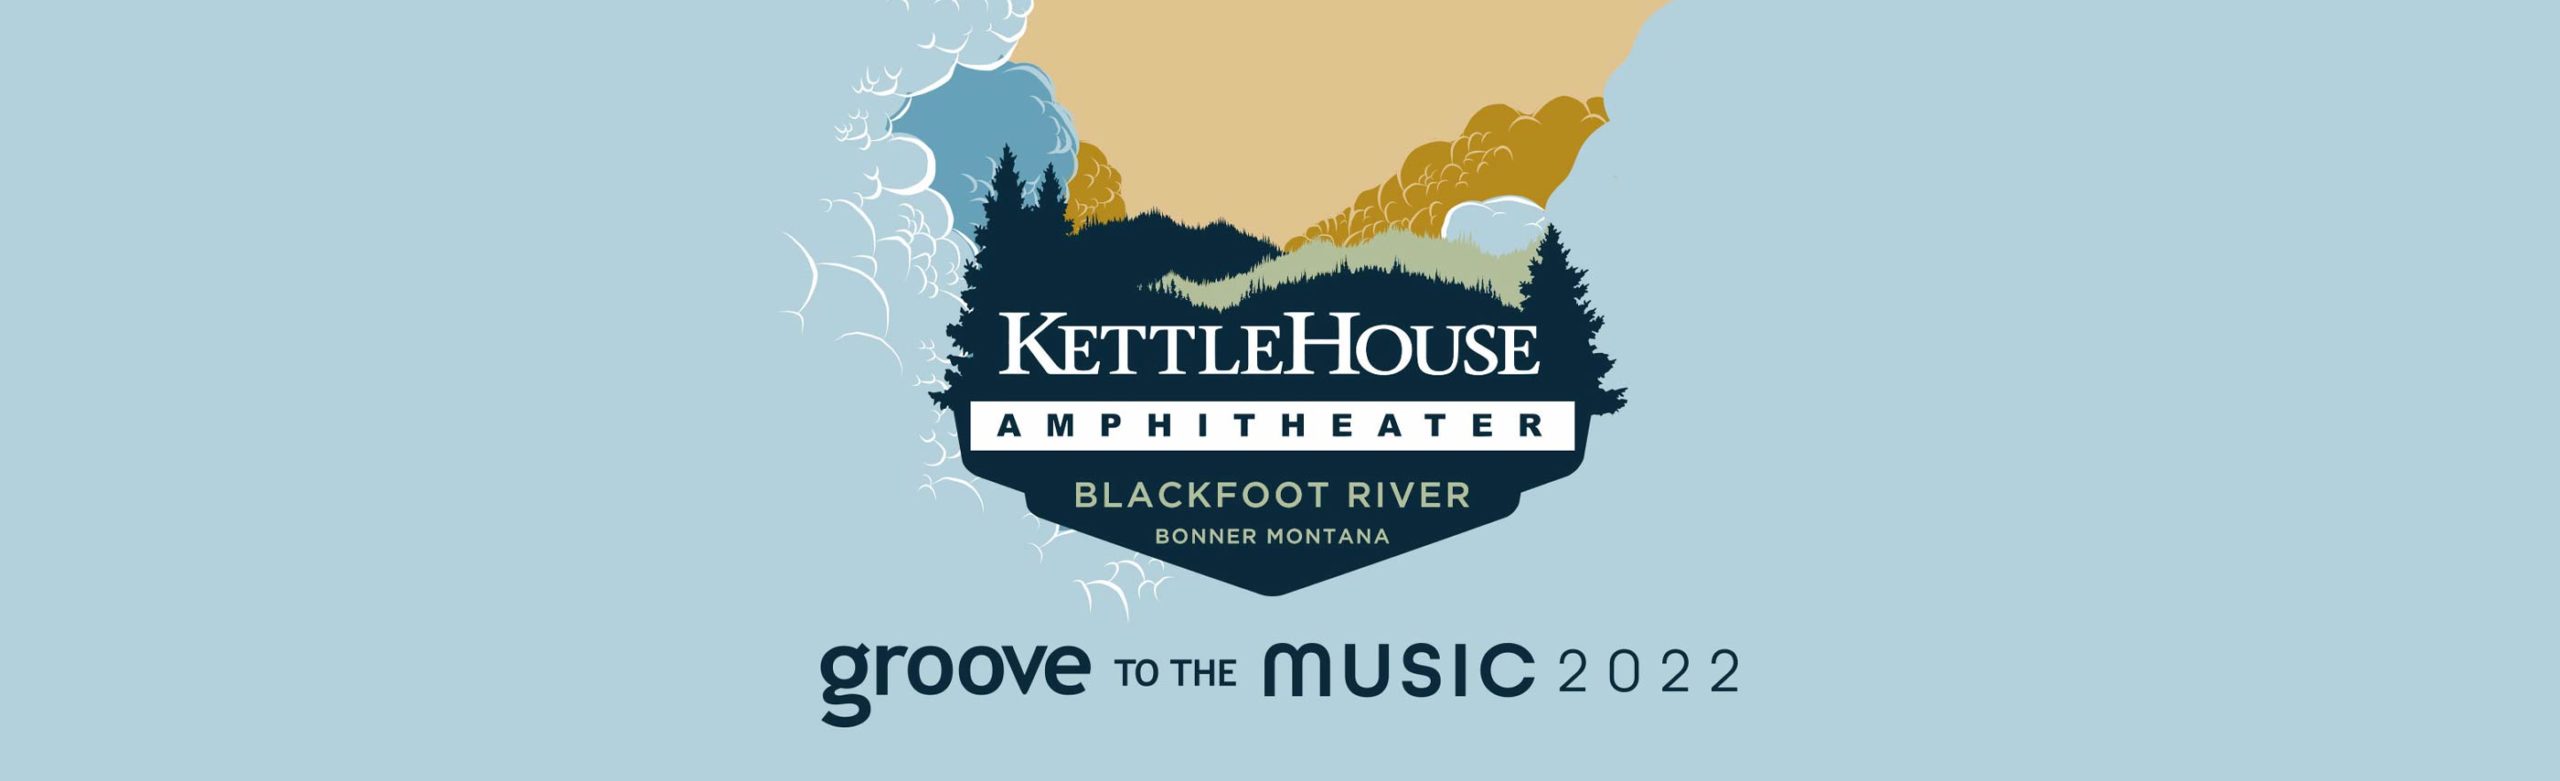 Groove Announced as 2022 Concert Season Sponsor for KettleHouse Amphitheater Image